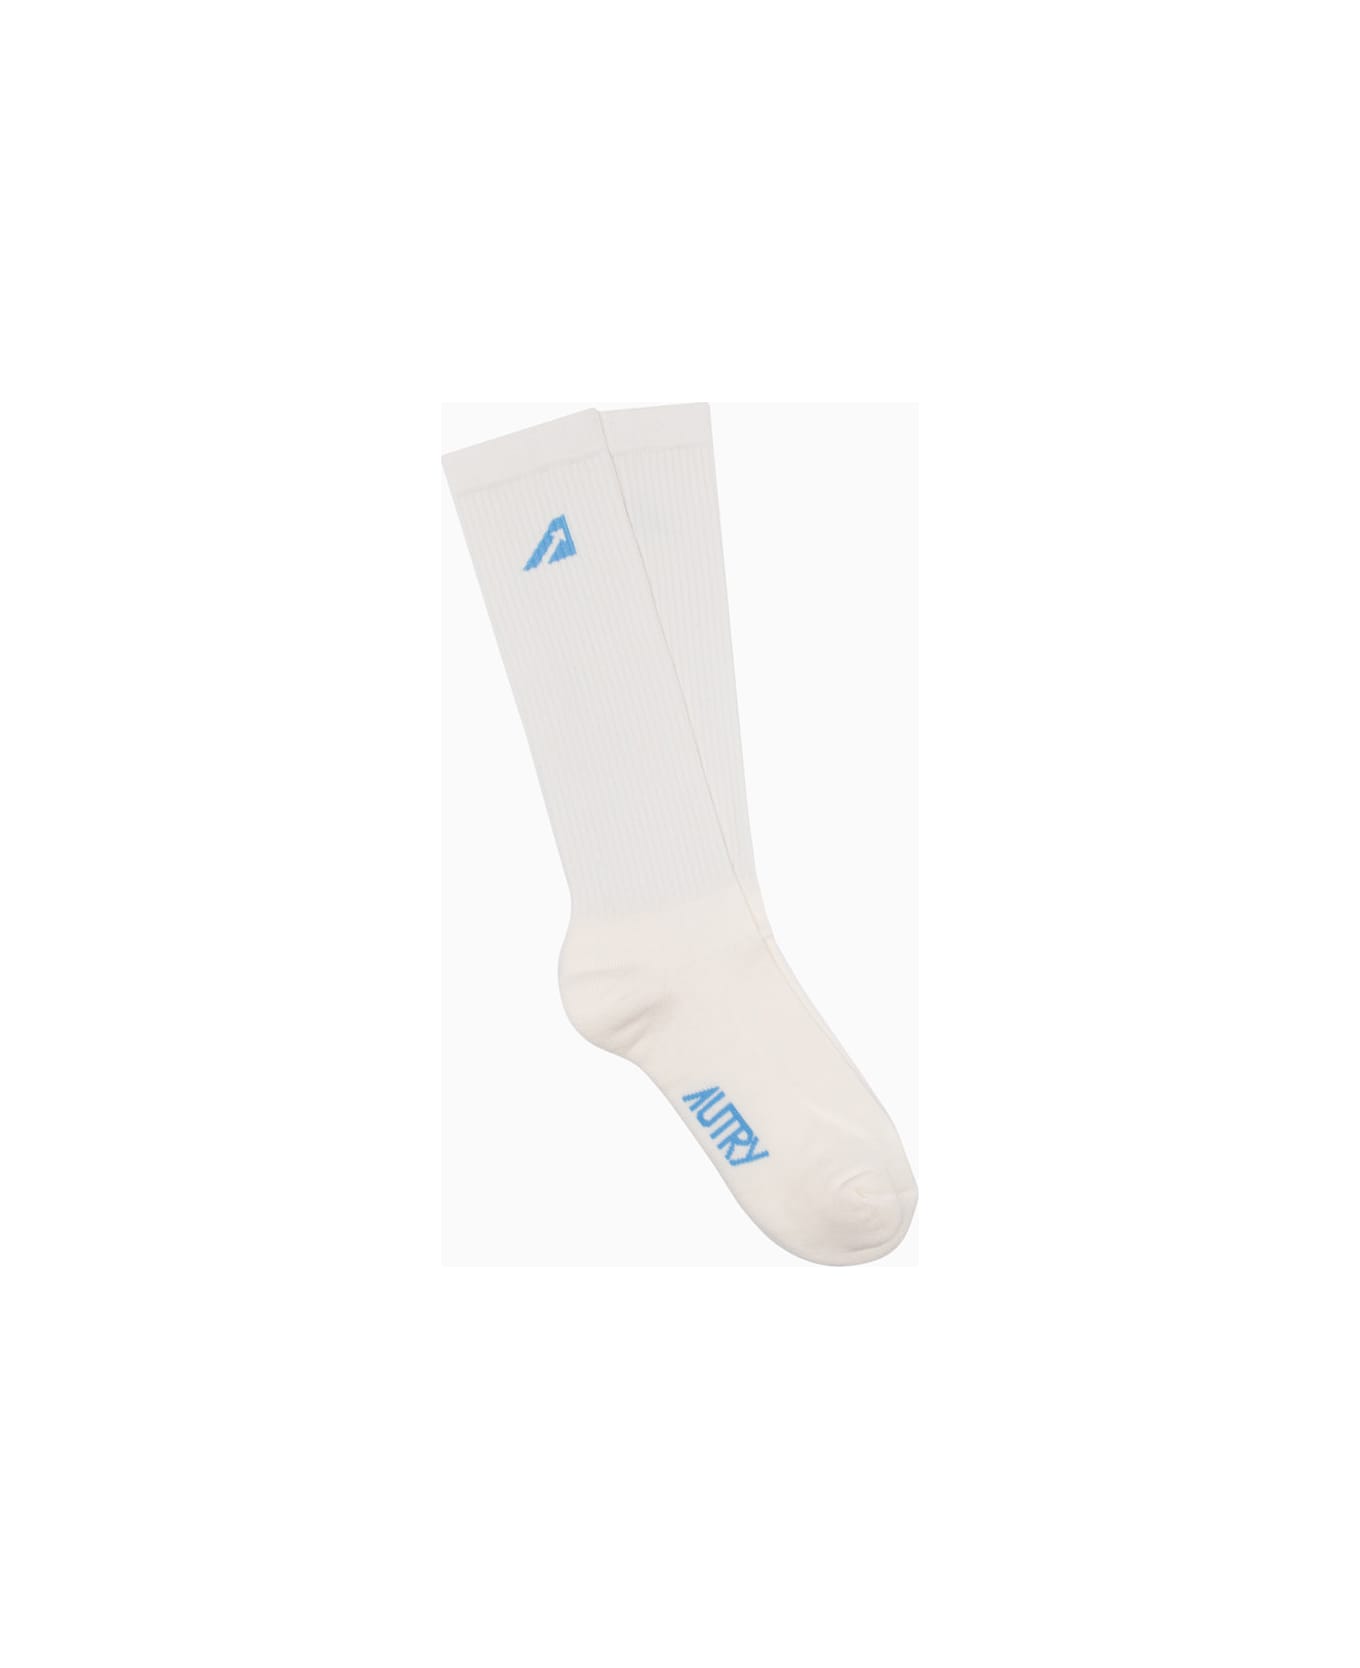 Autry Main Socks - White/azur 靴下